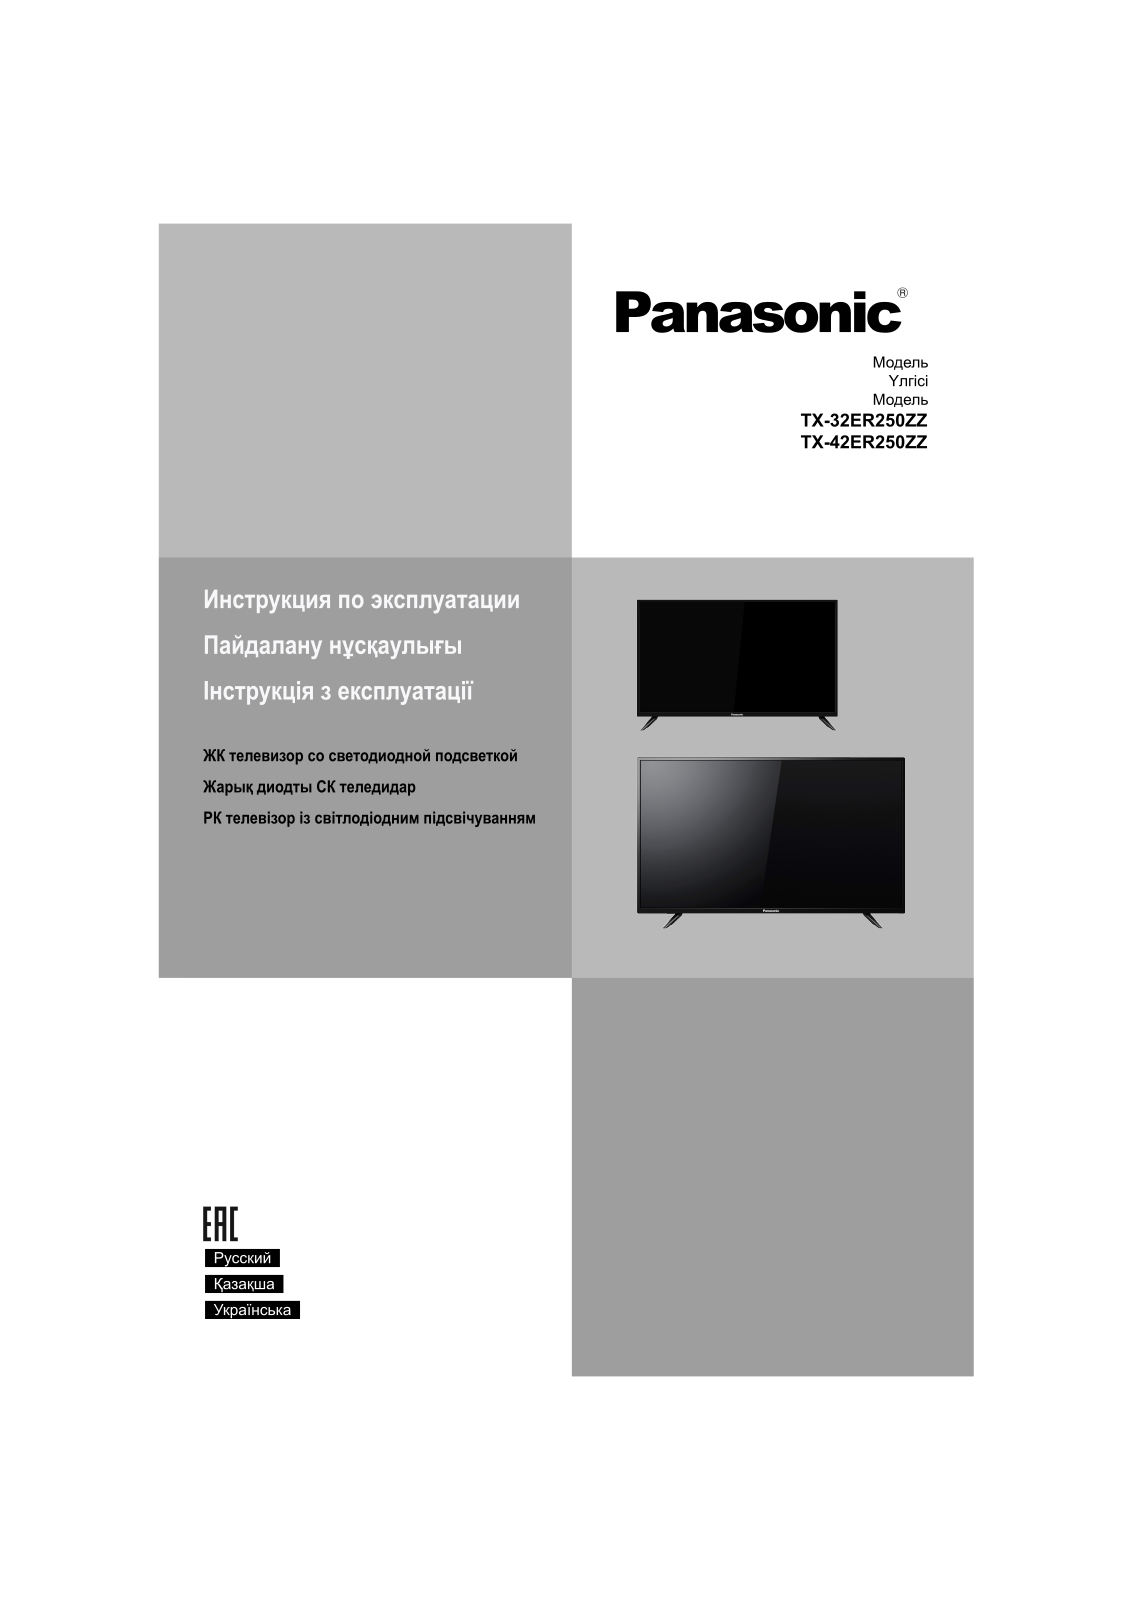 Panasonic TX-42ER250ZZ User Manual